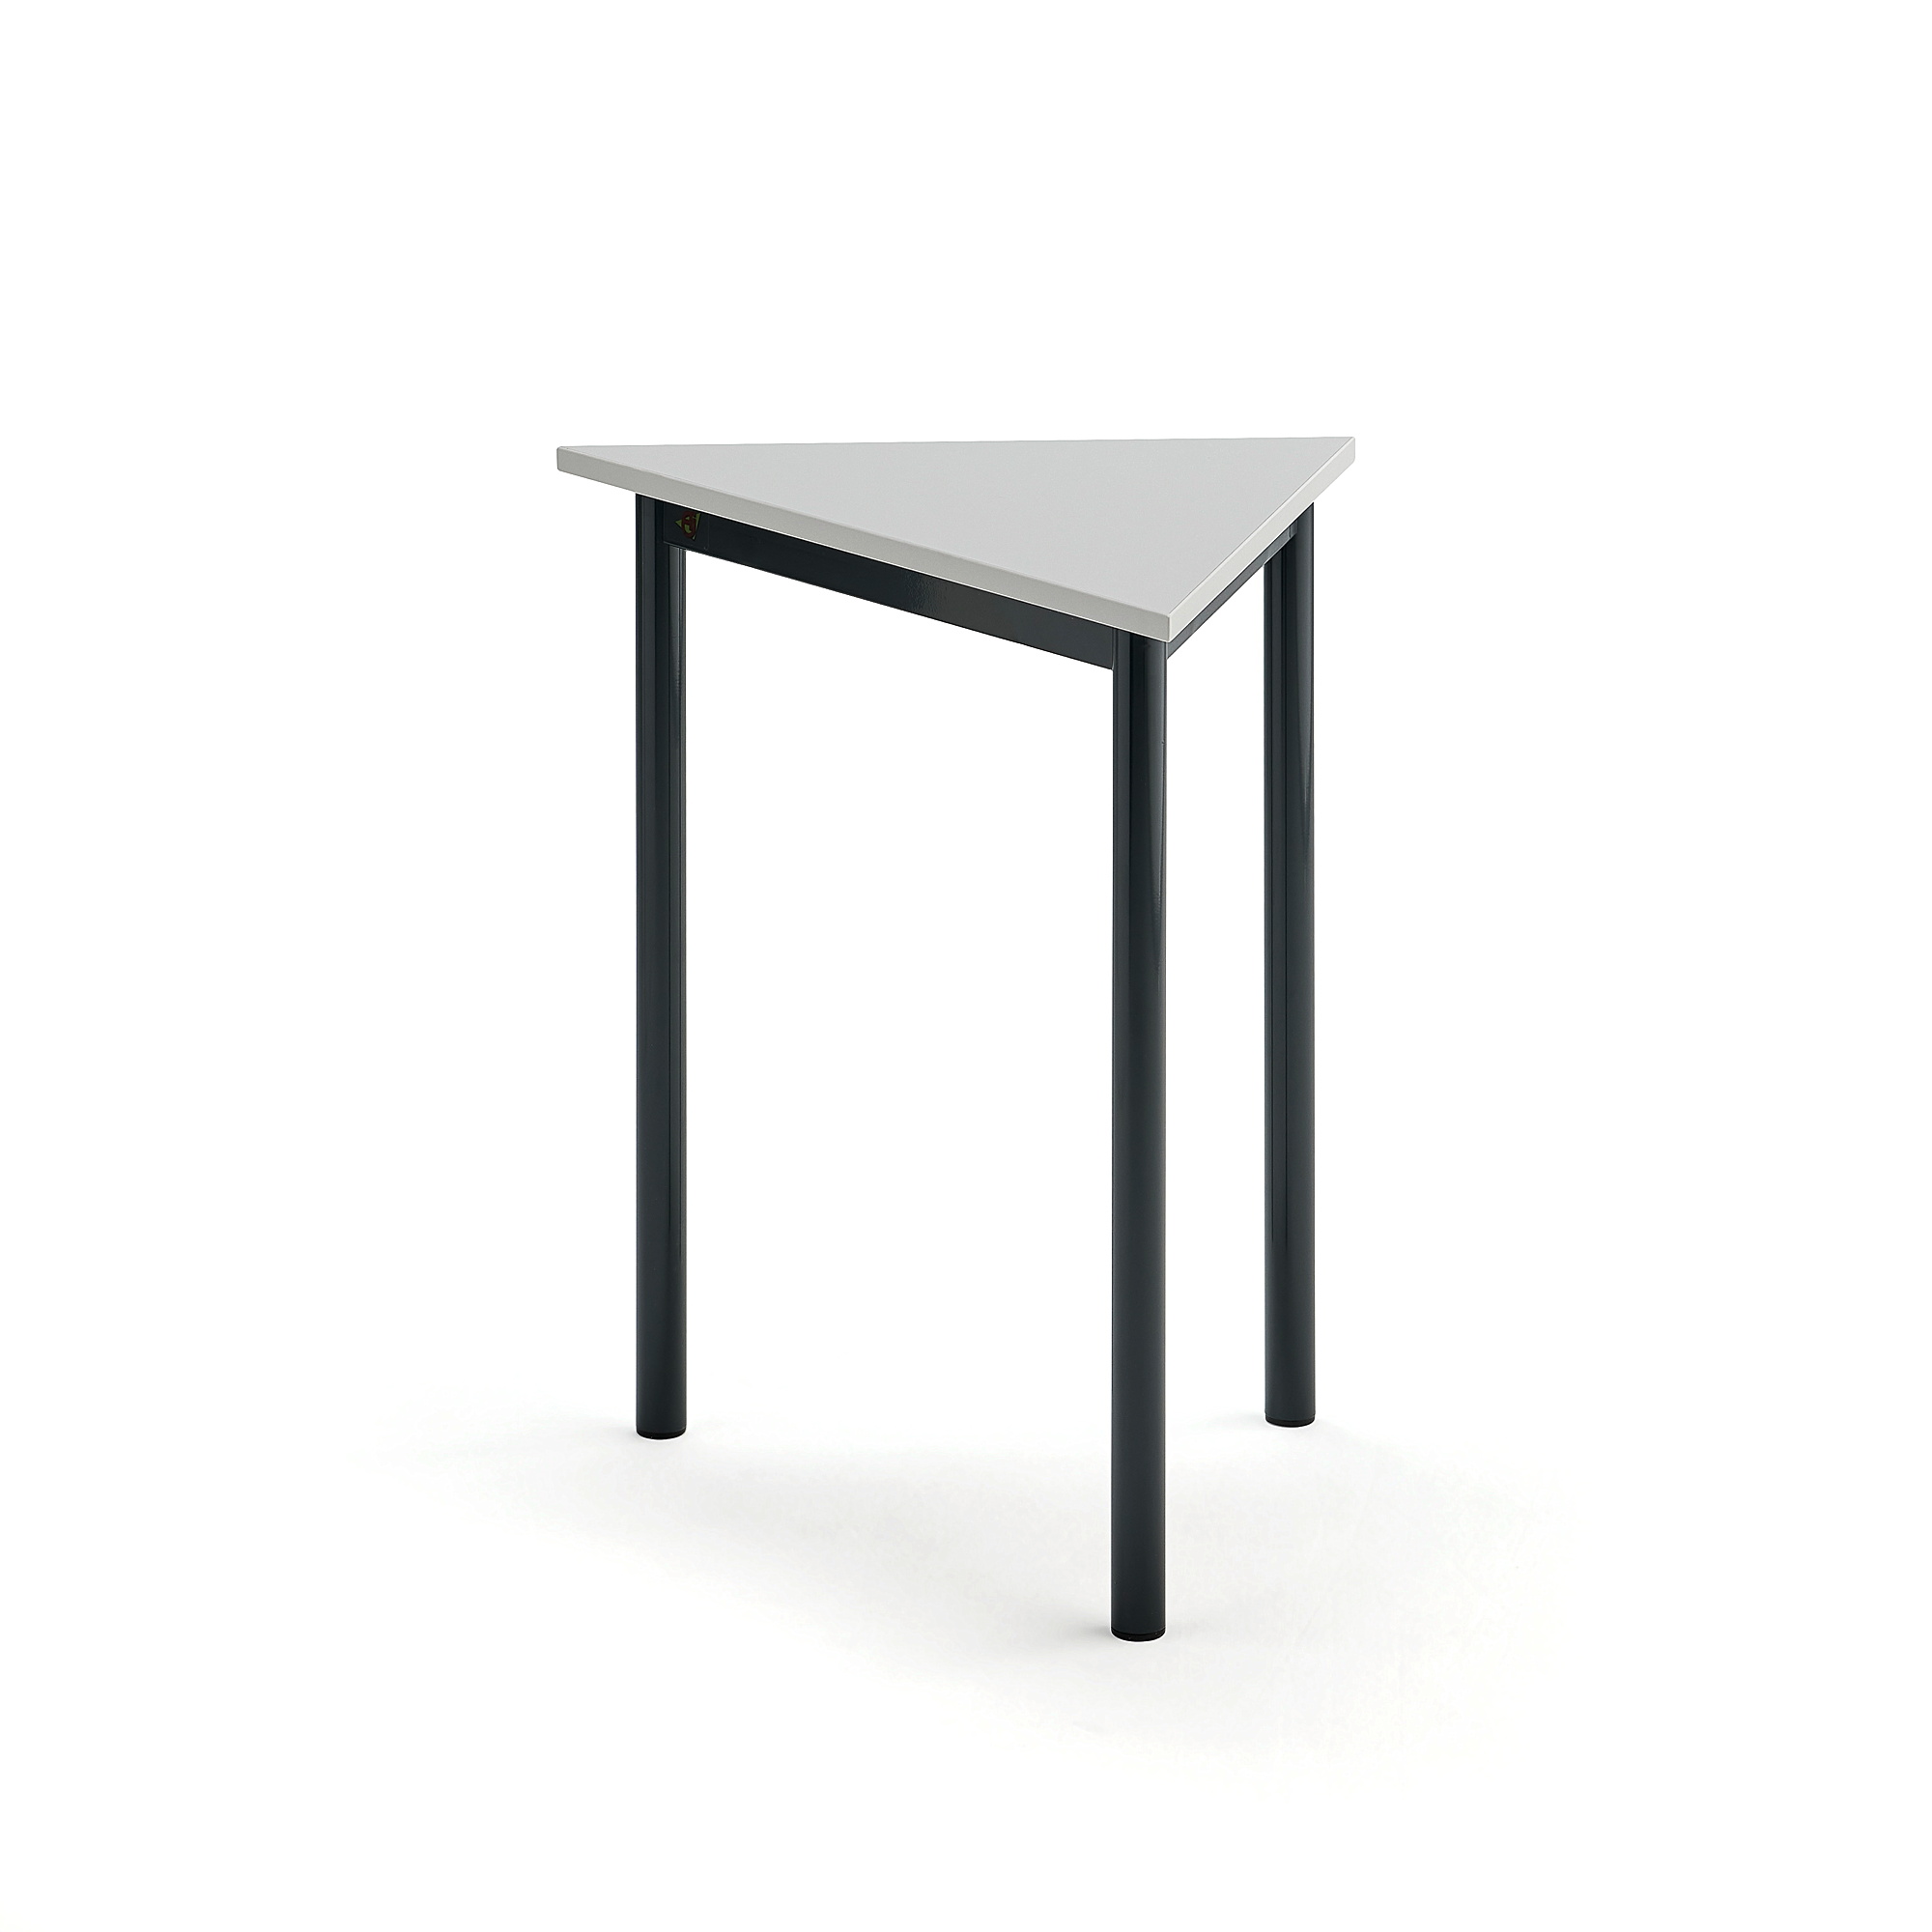 Stůl BORÅS TRIANGEL, 700x600x720 mm, antracitově šedé nohy, HPL deska, šedá